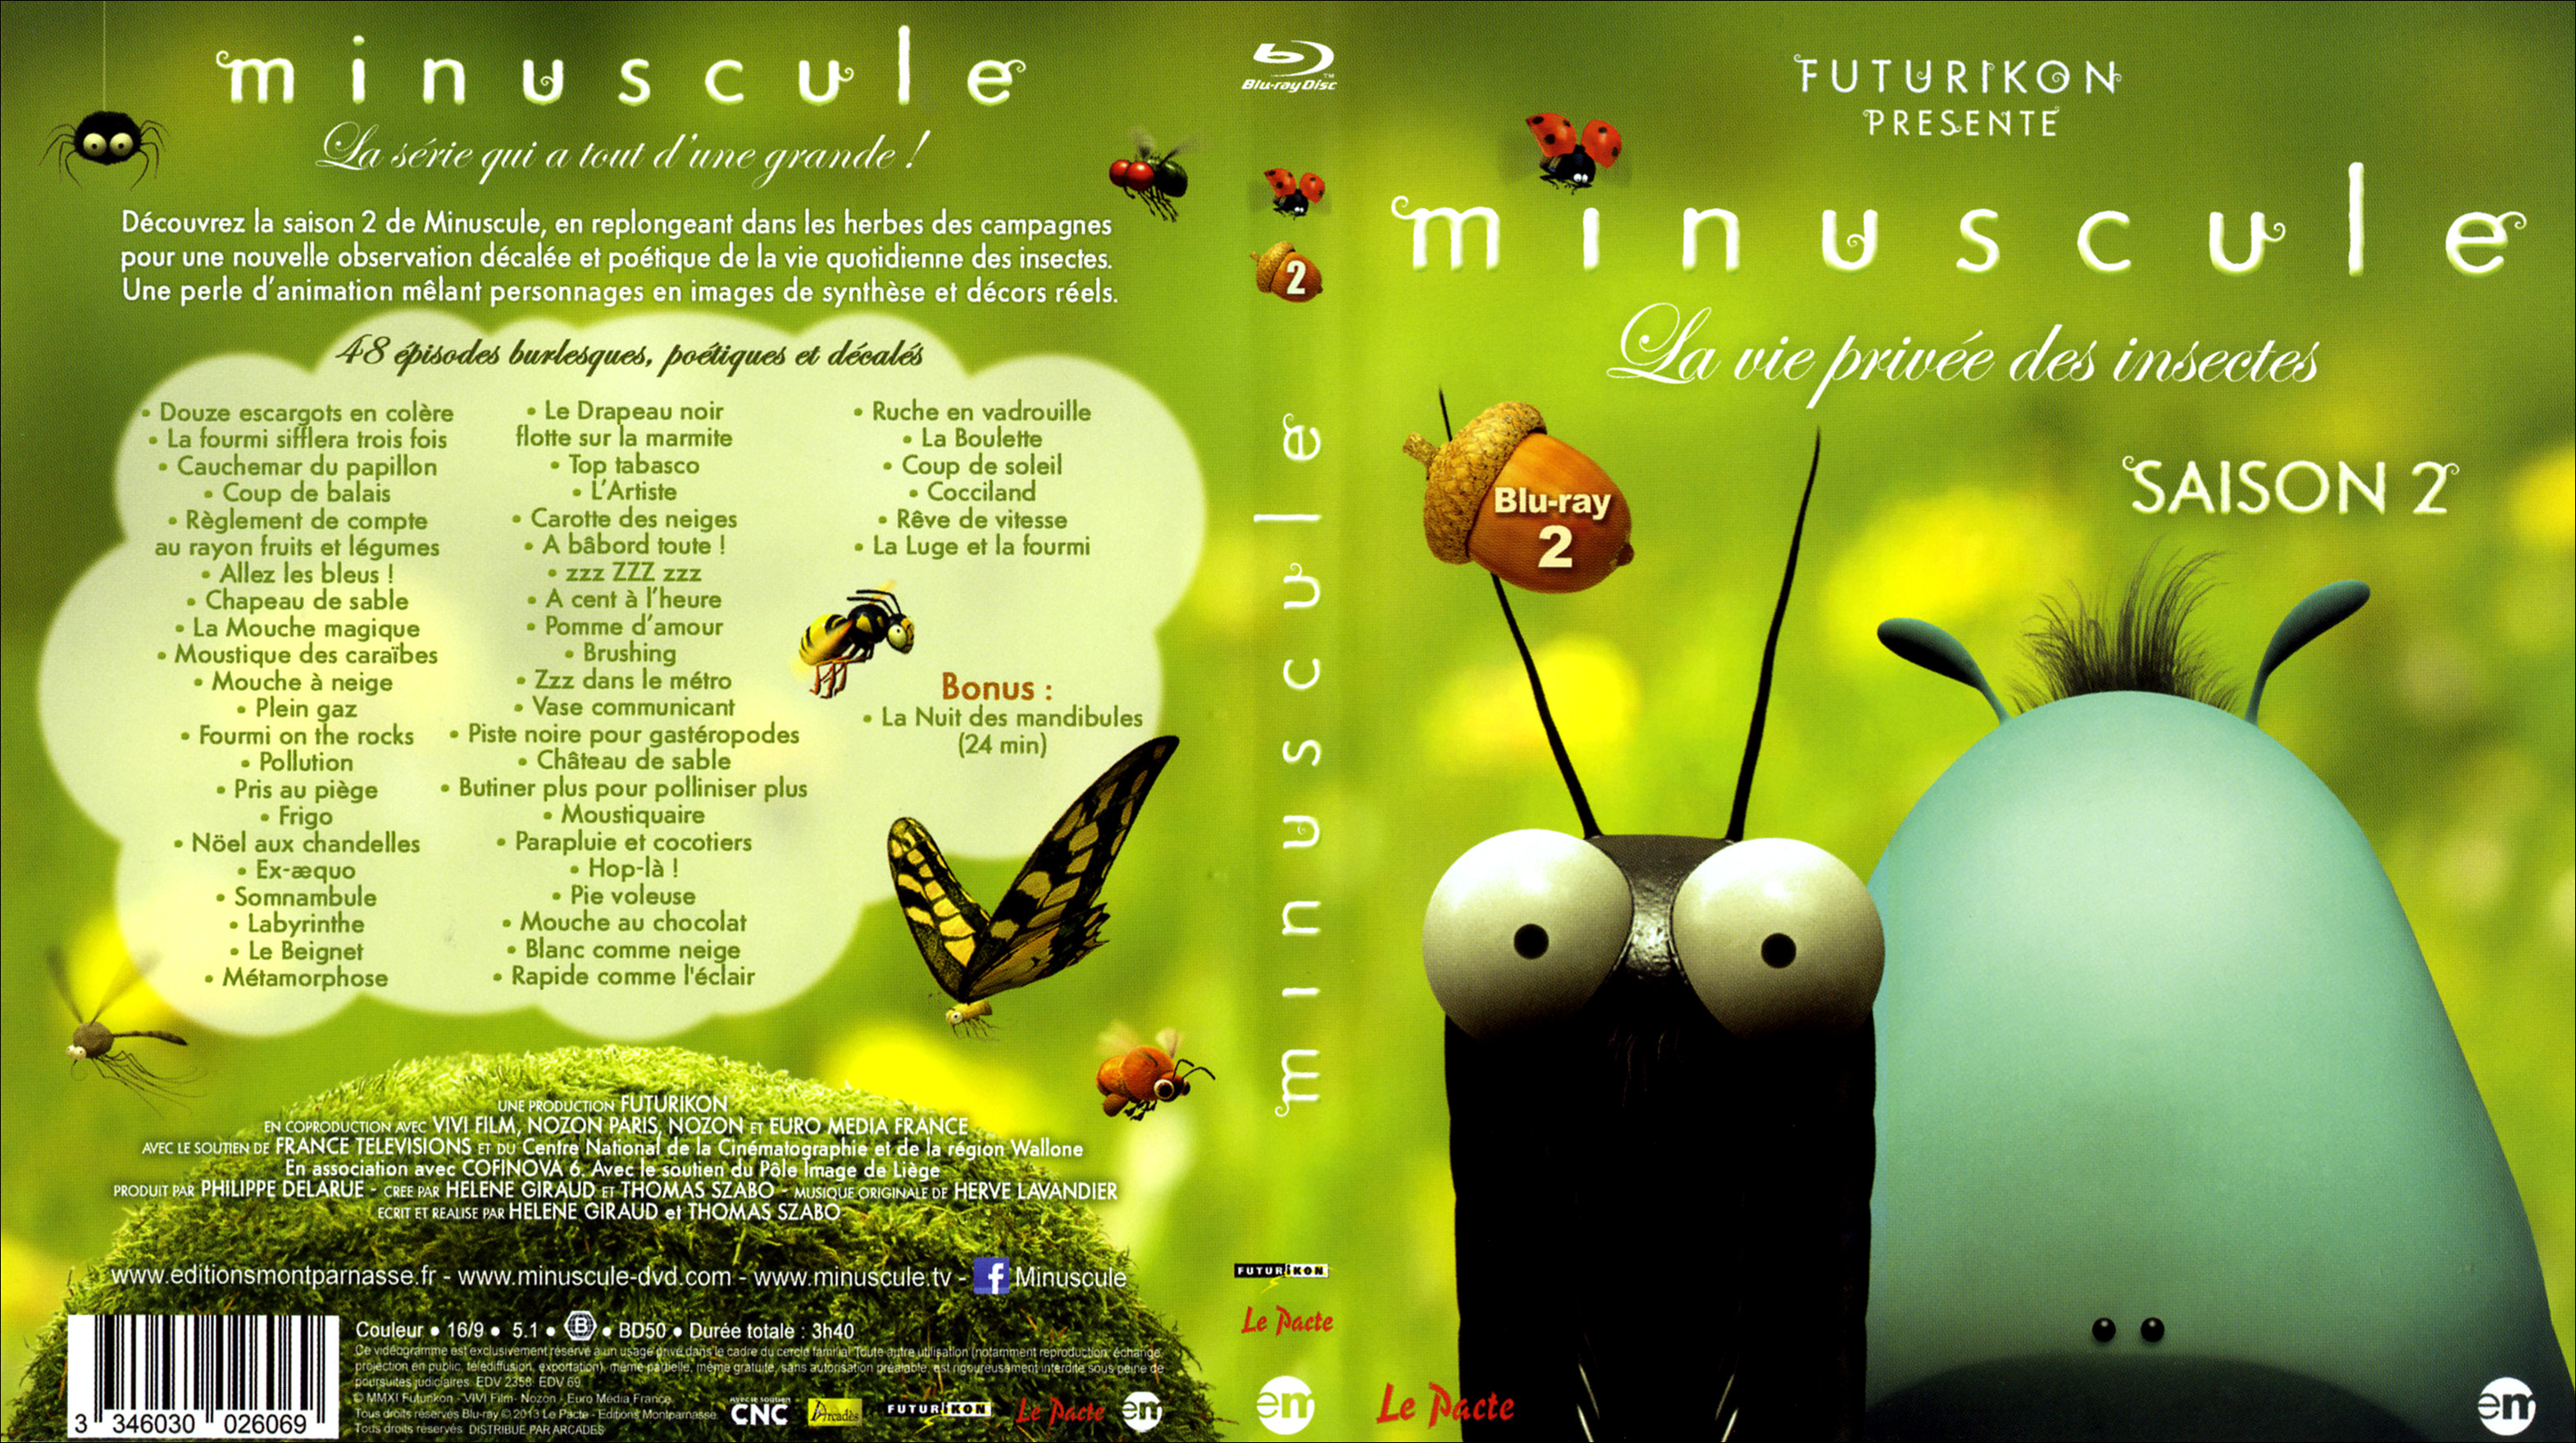 Jaquette DVD Minuscule Saison 2 DISC 2 (BLU-RAY)